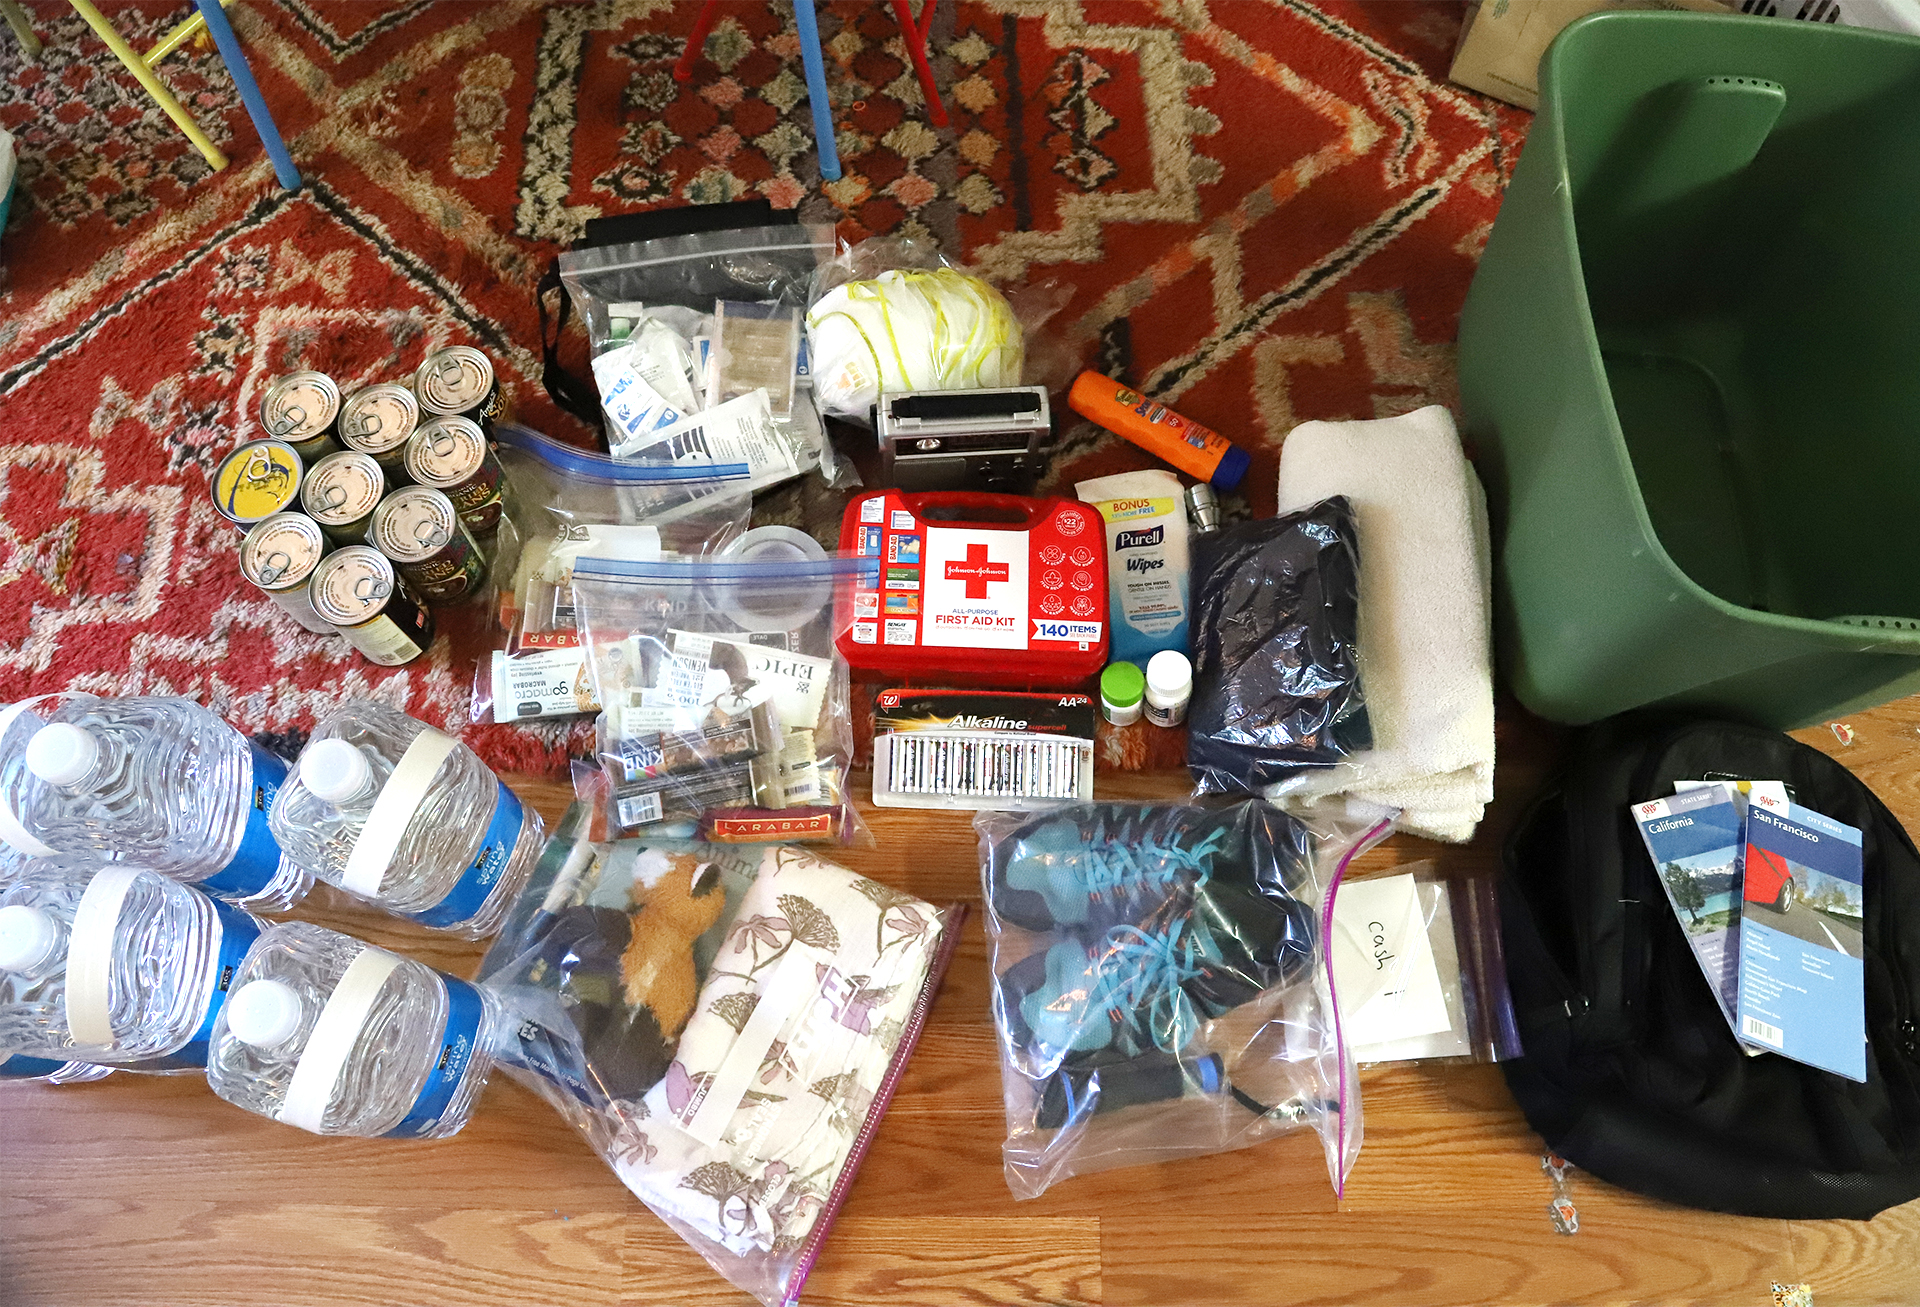 Day Three: Putting Together My Earthquake Kits